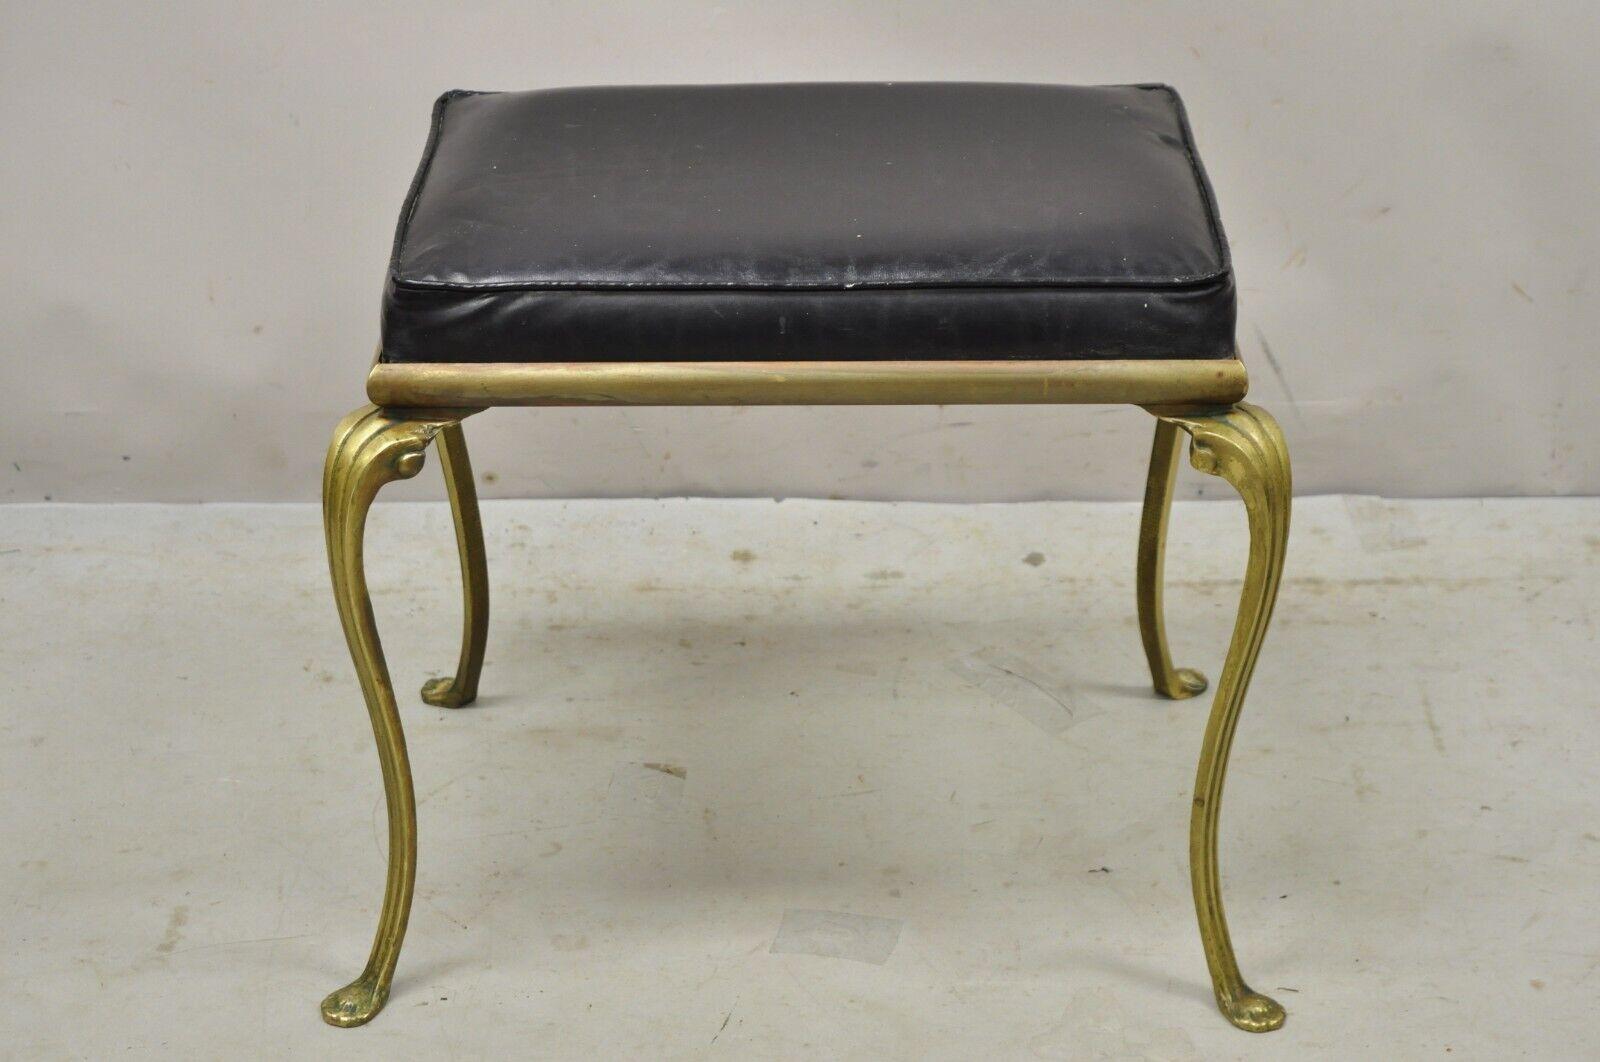 Vintage Hollywood Regency brass frame cabriole leg vanity bench, circa early 1900s. Measurements: 17